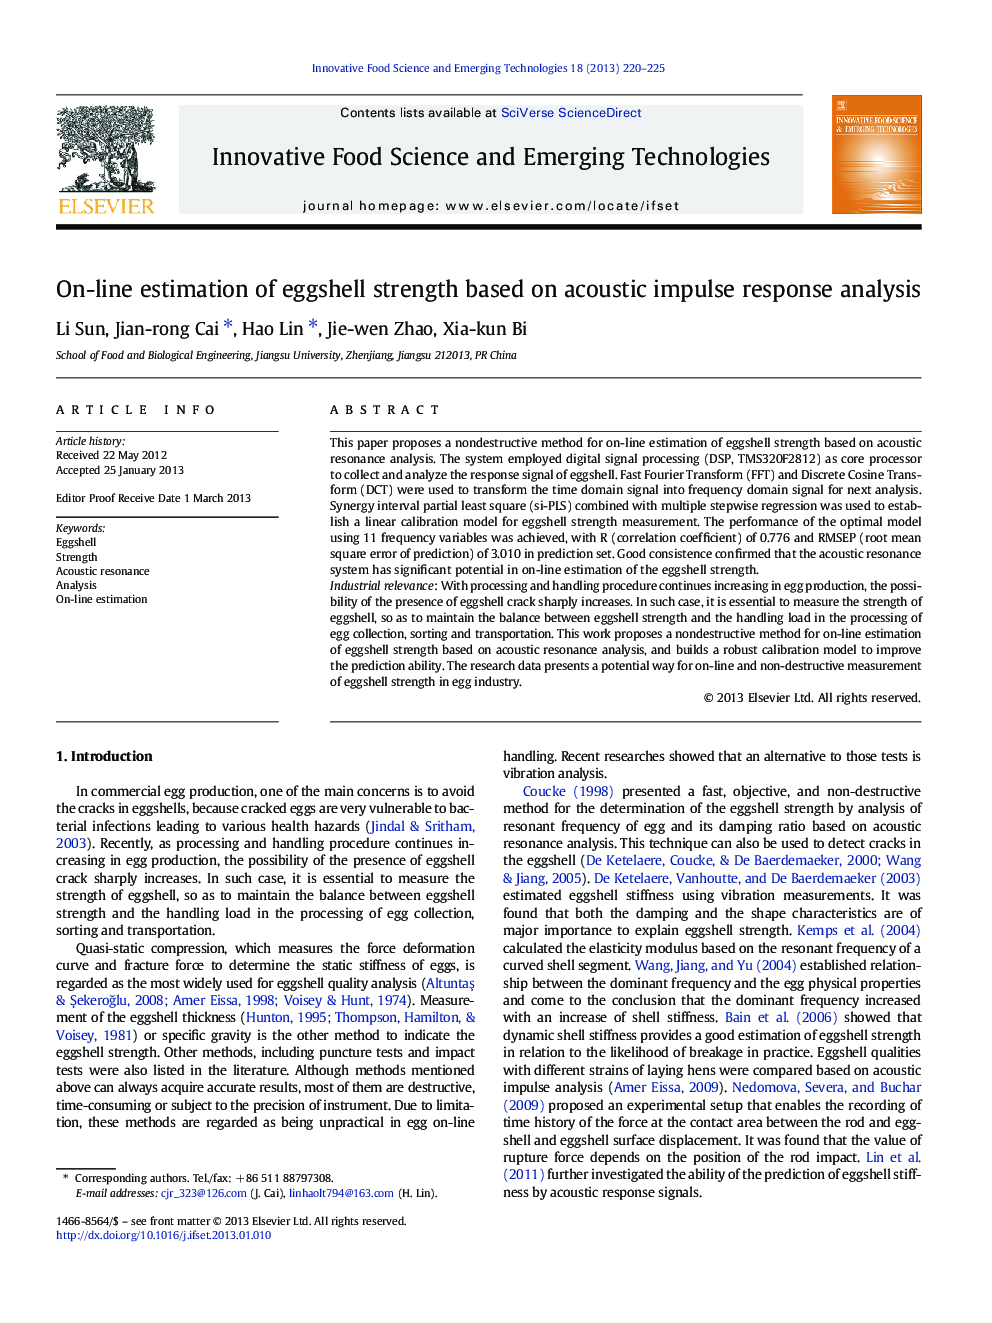 On-line estimation of eggshell strength based on acoustic impulse response analysis